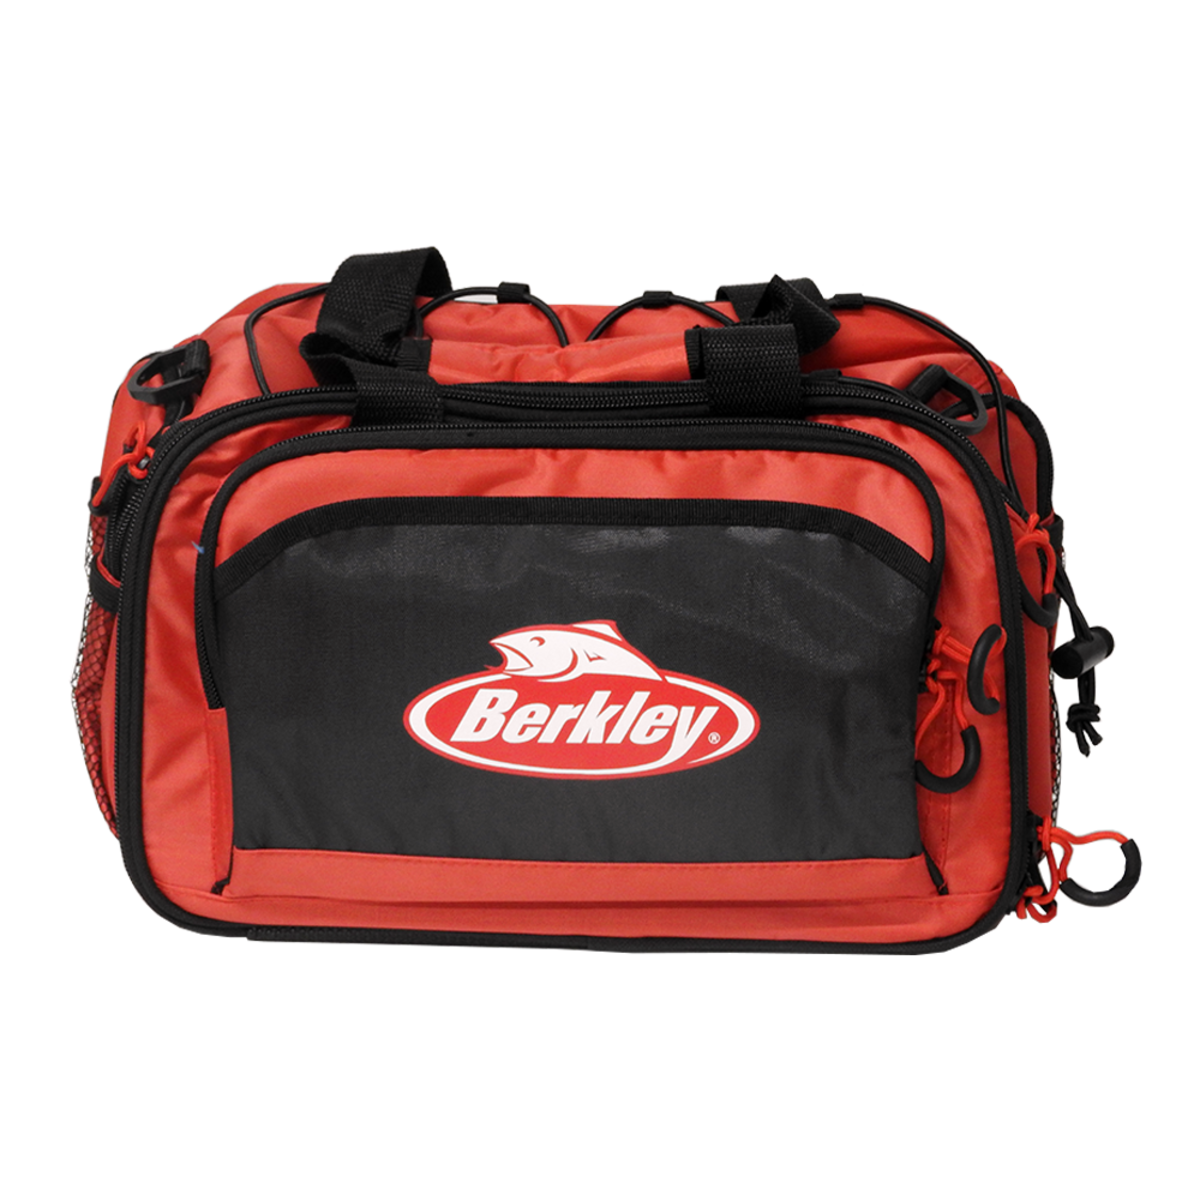 Berkley Medium Size Tackle Bag